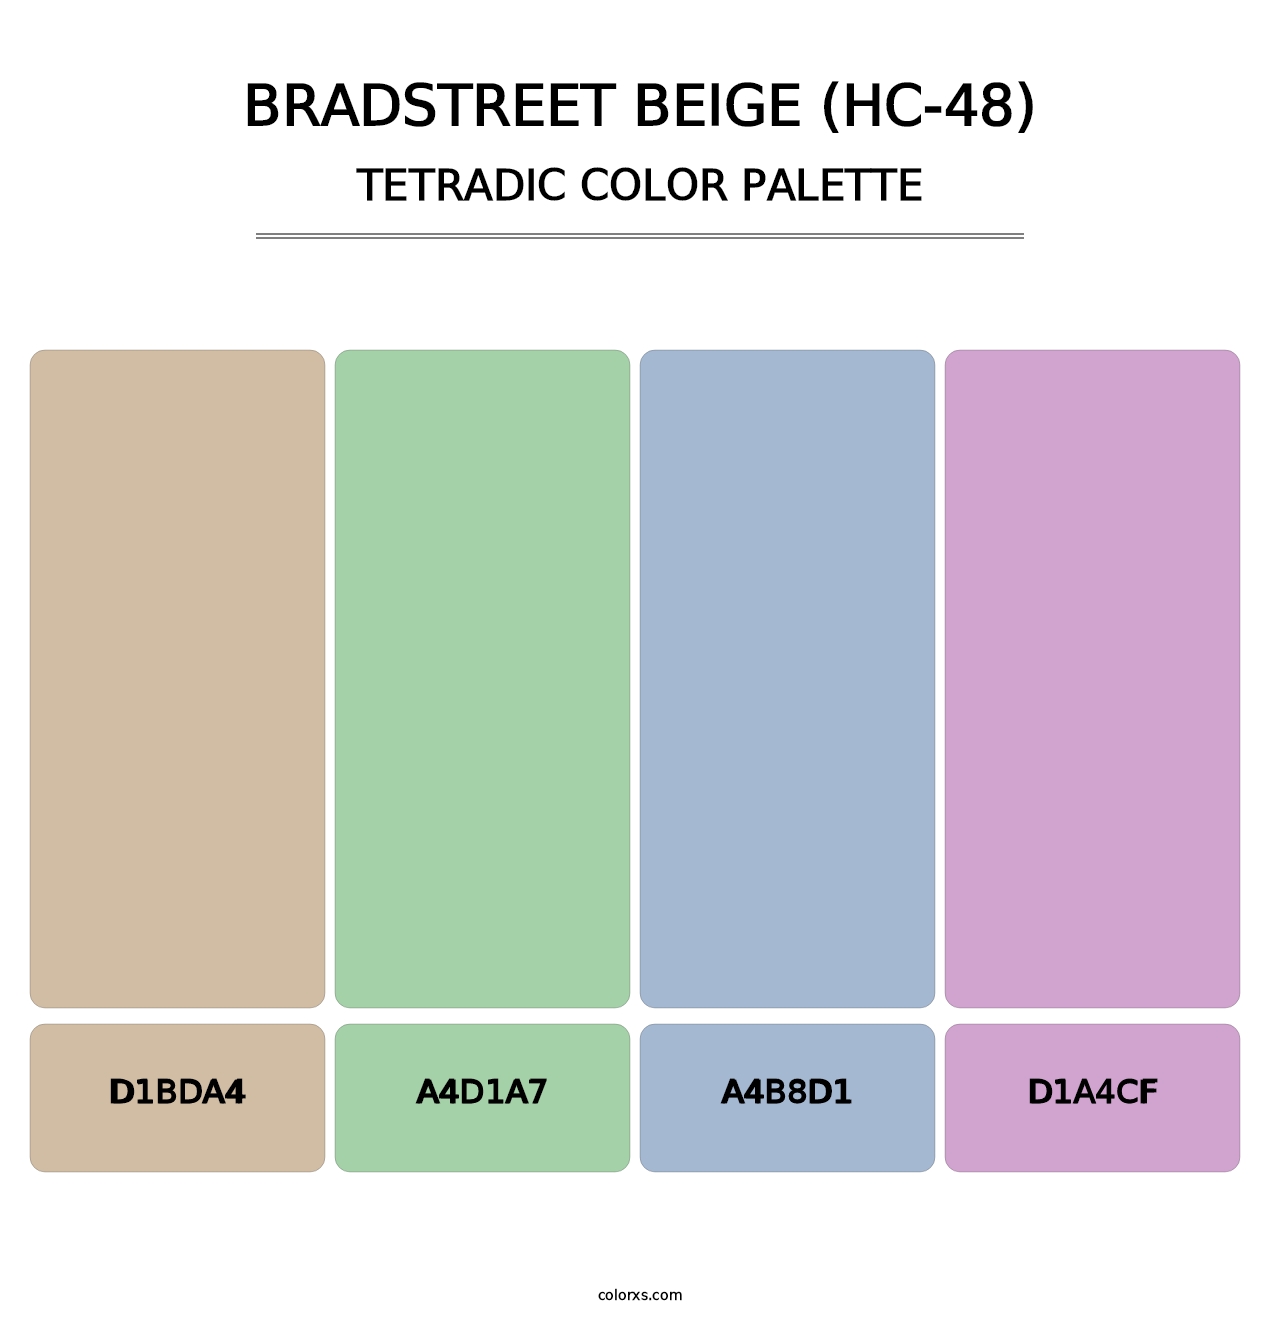 Bradstreet Beige (HC-48) - Tetradic Color Palette